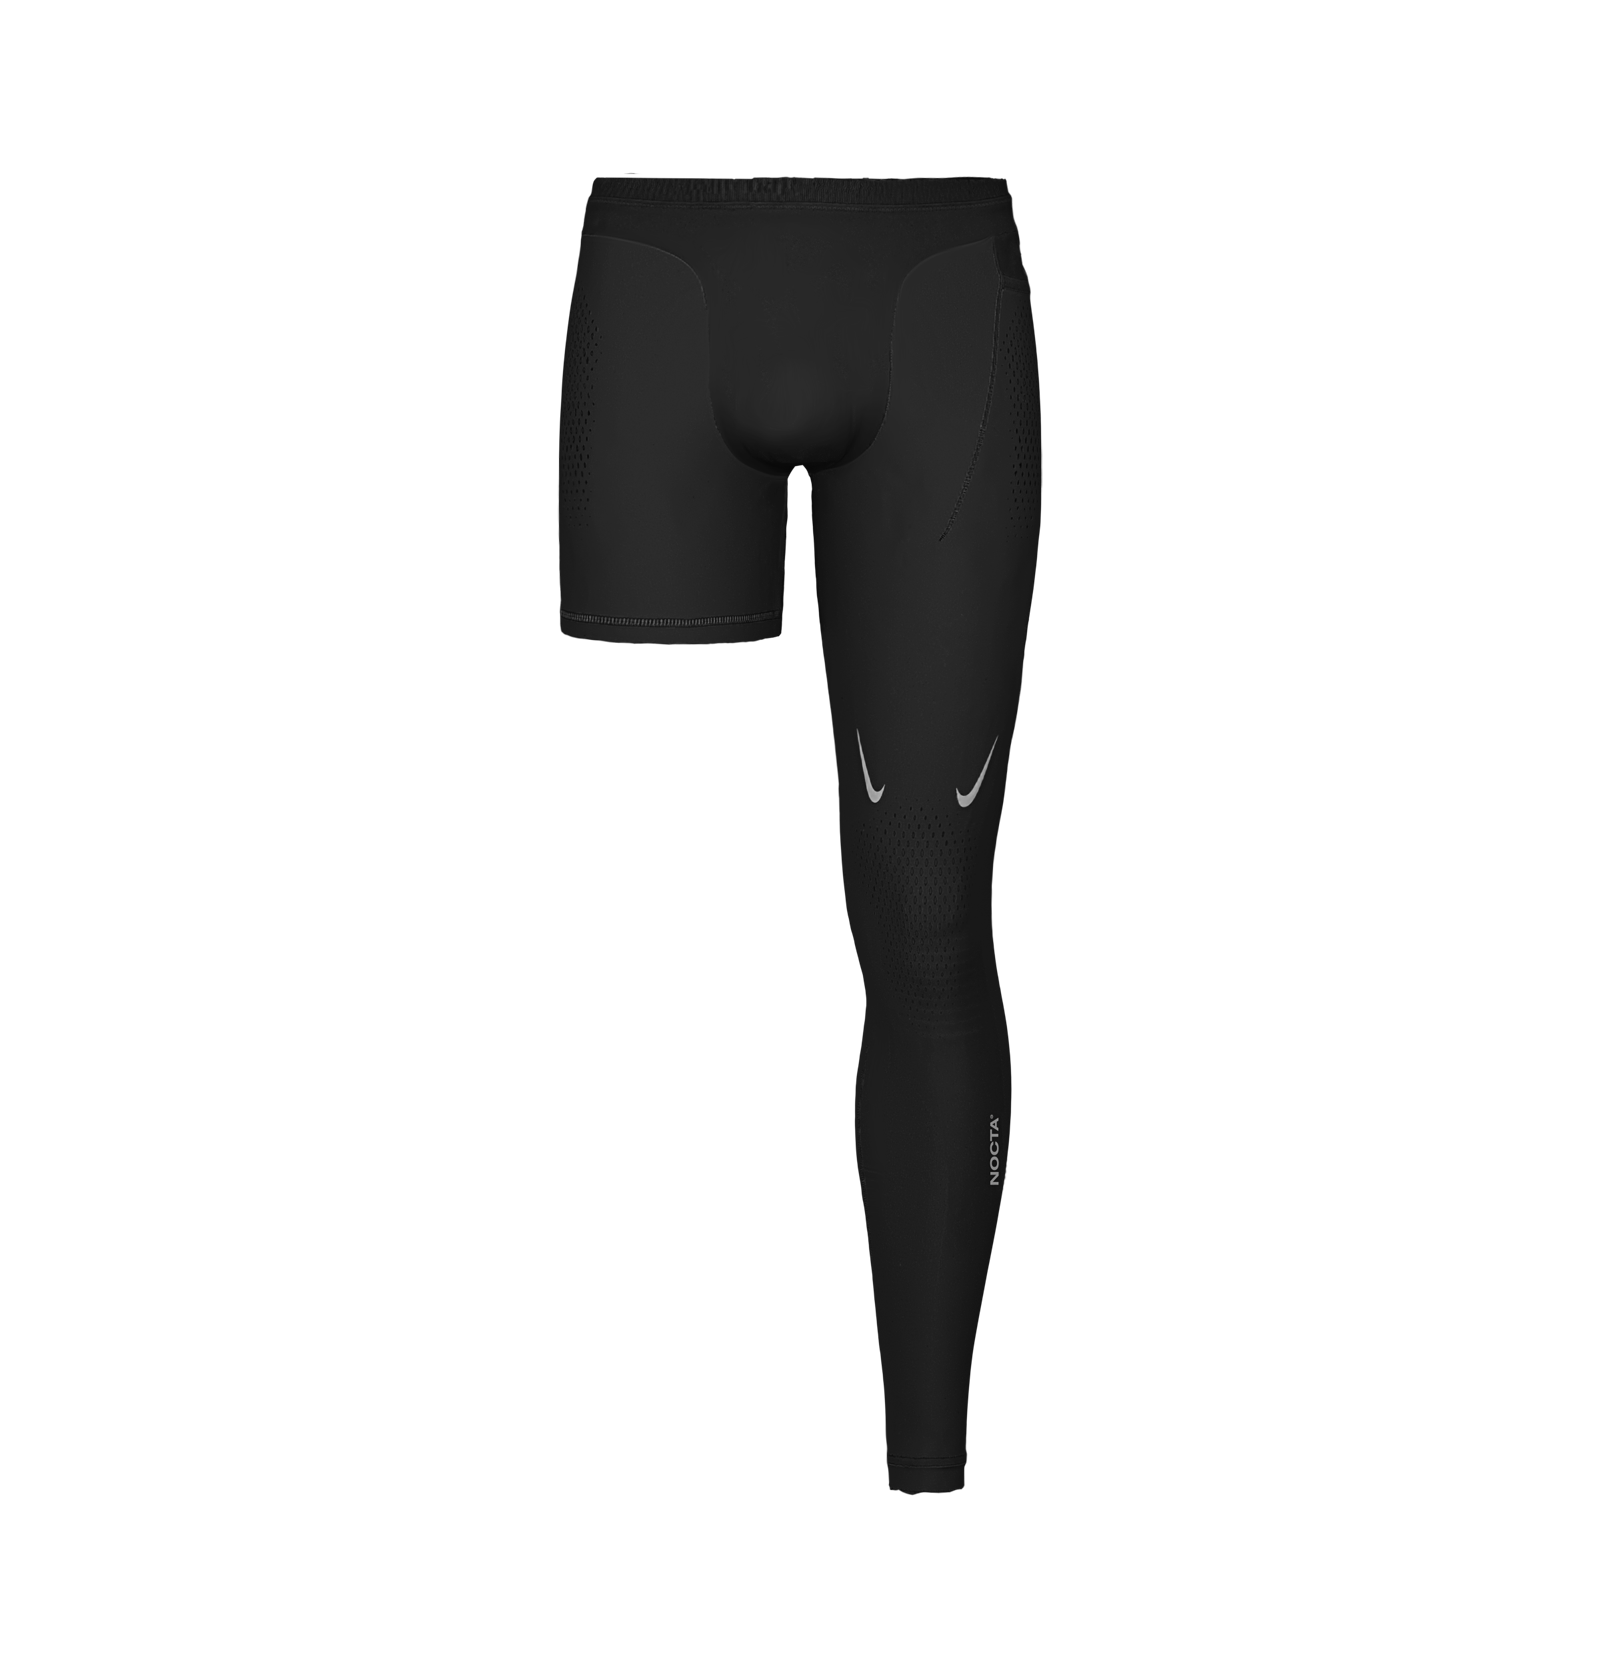  Men's Basketball Single Leg Tight Sports Pants 1/2 One